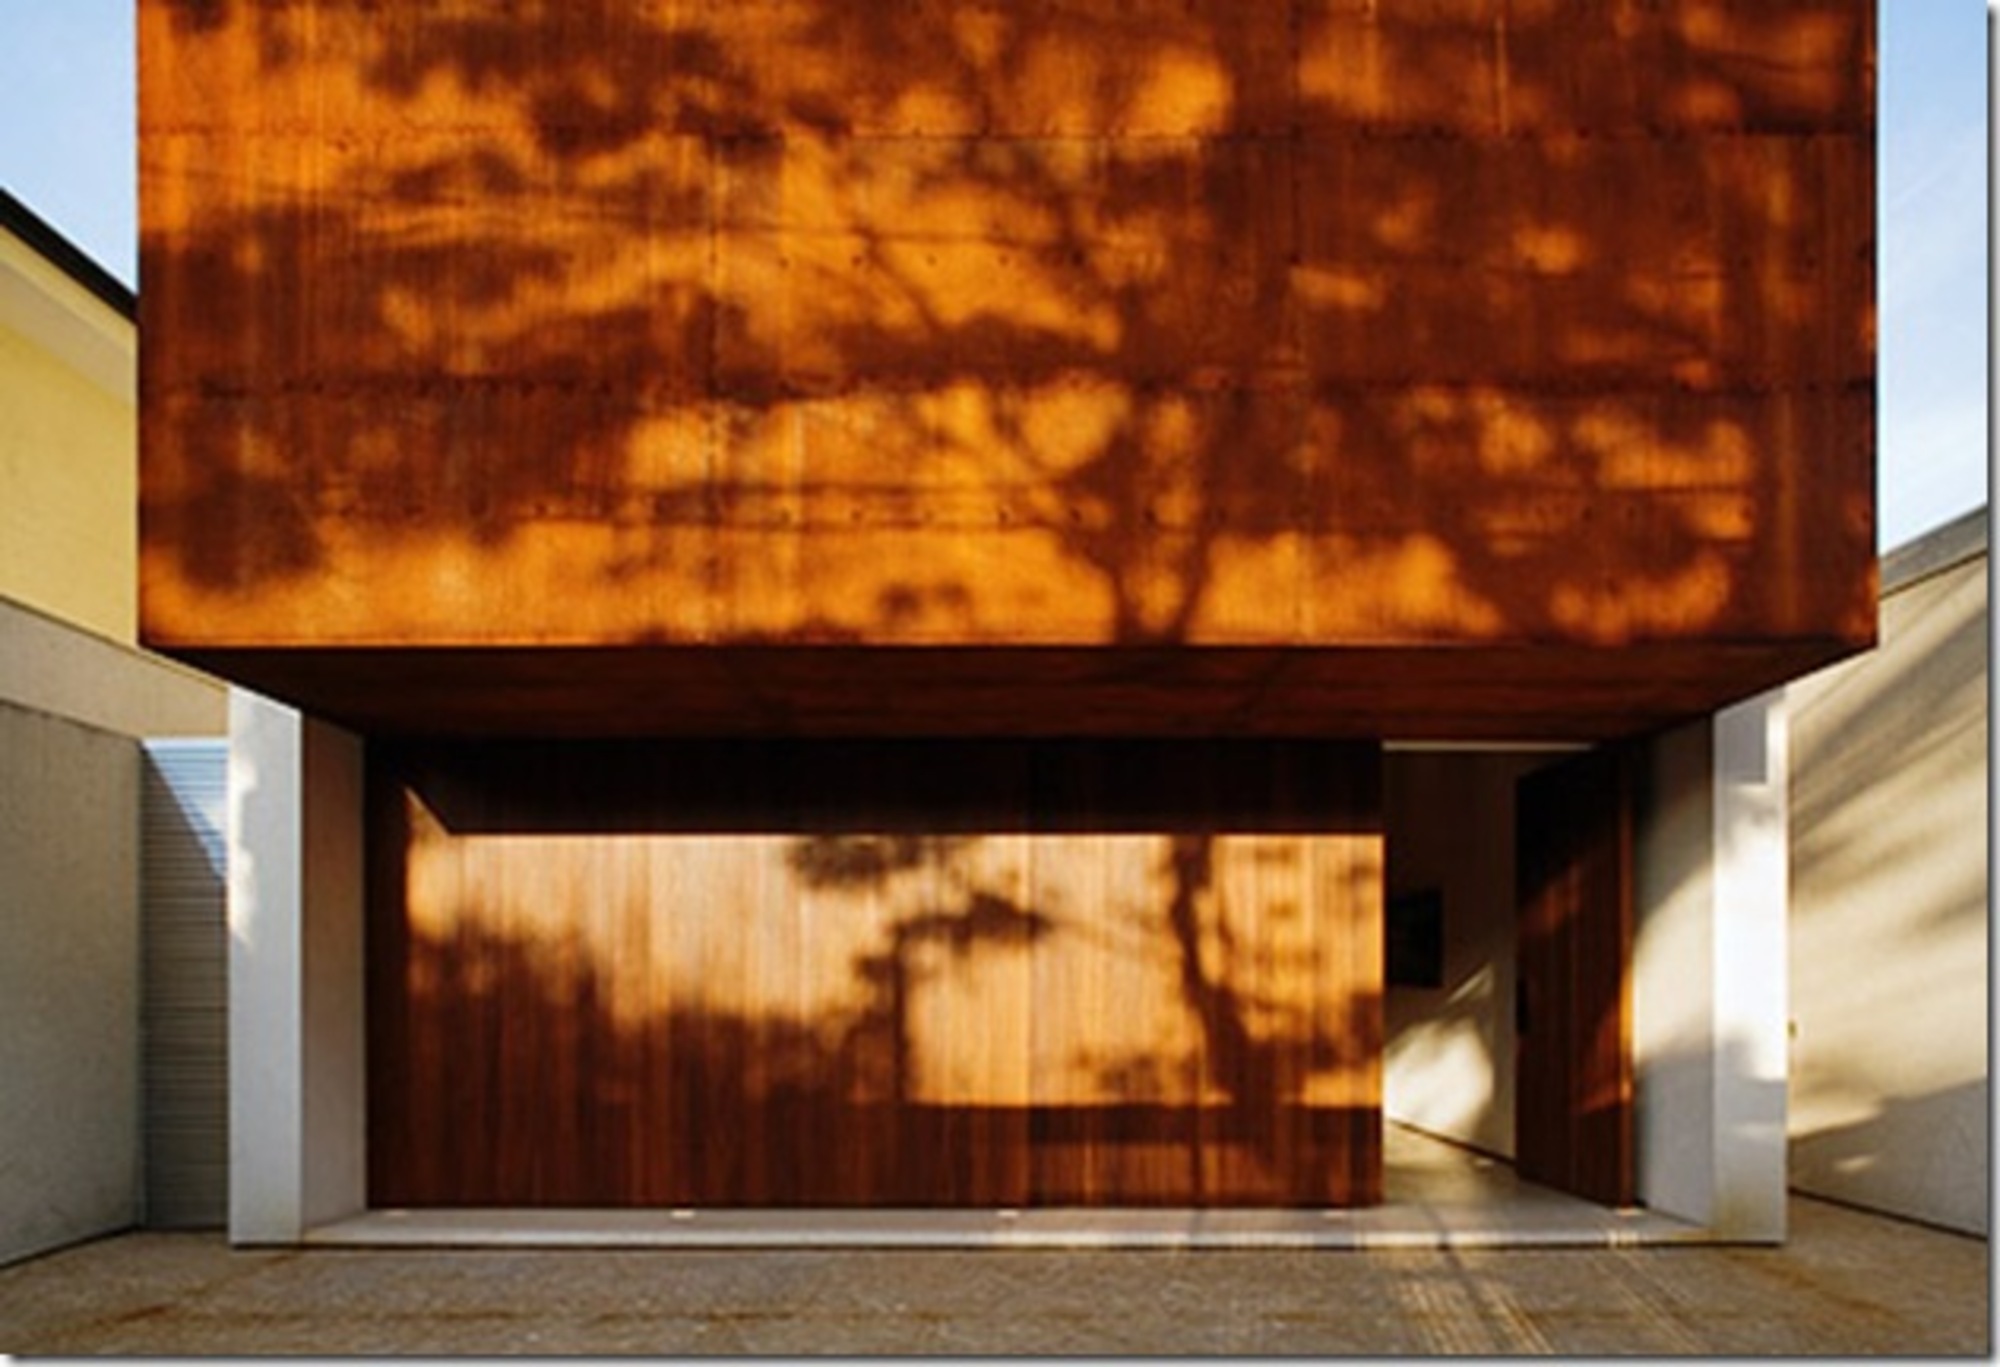 Fachada da casa projetada por Marcio Kogan e fotografada por Nelson Kon